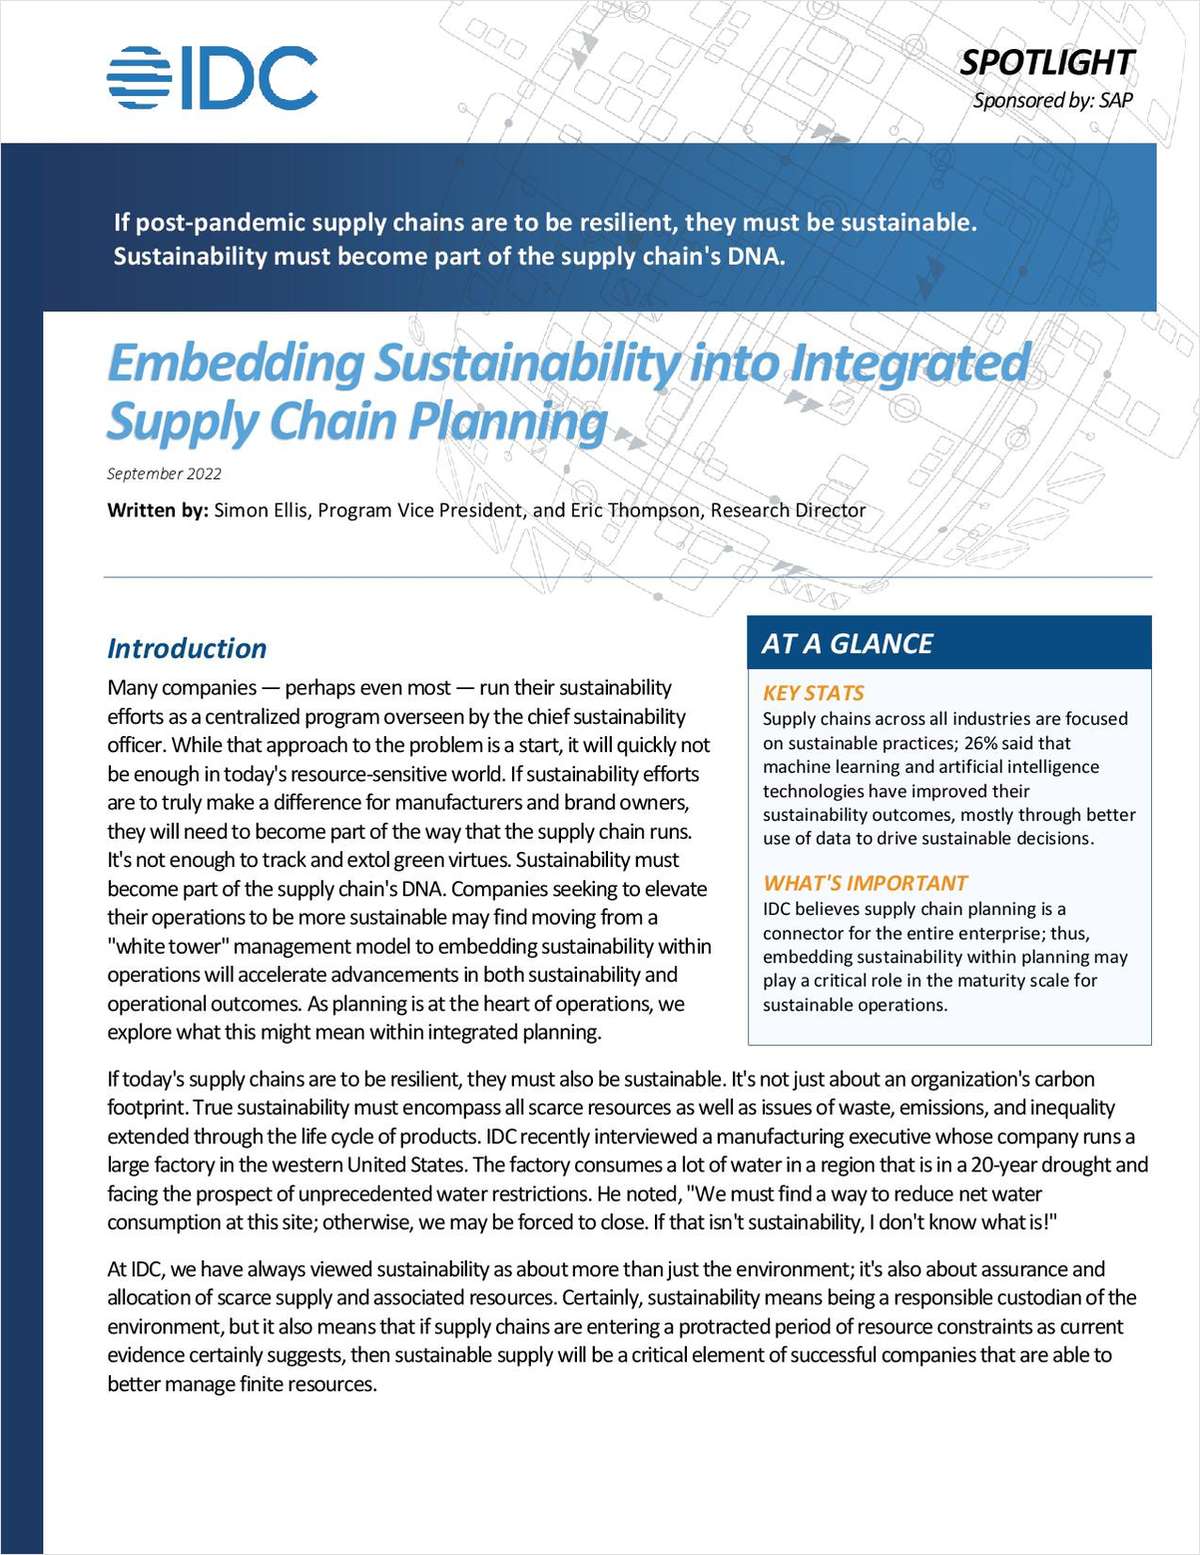 IDC Spotlight: Integrated Supply Chain Planning